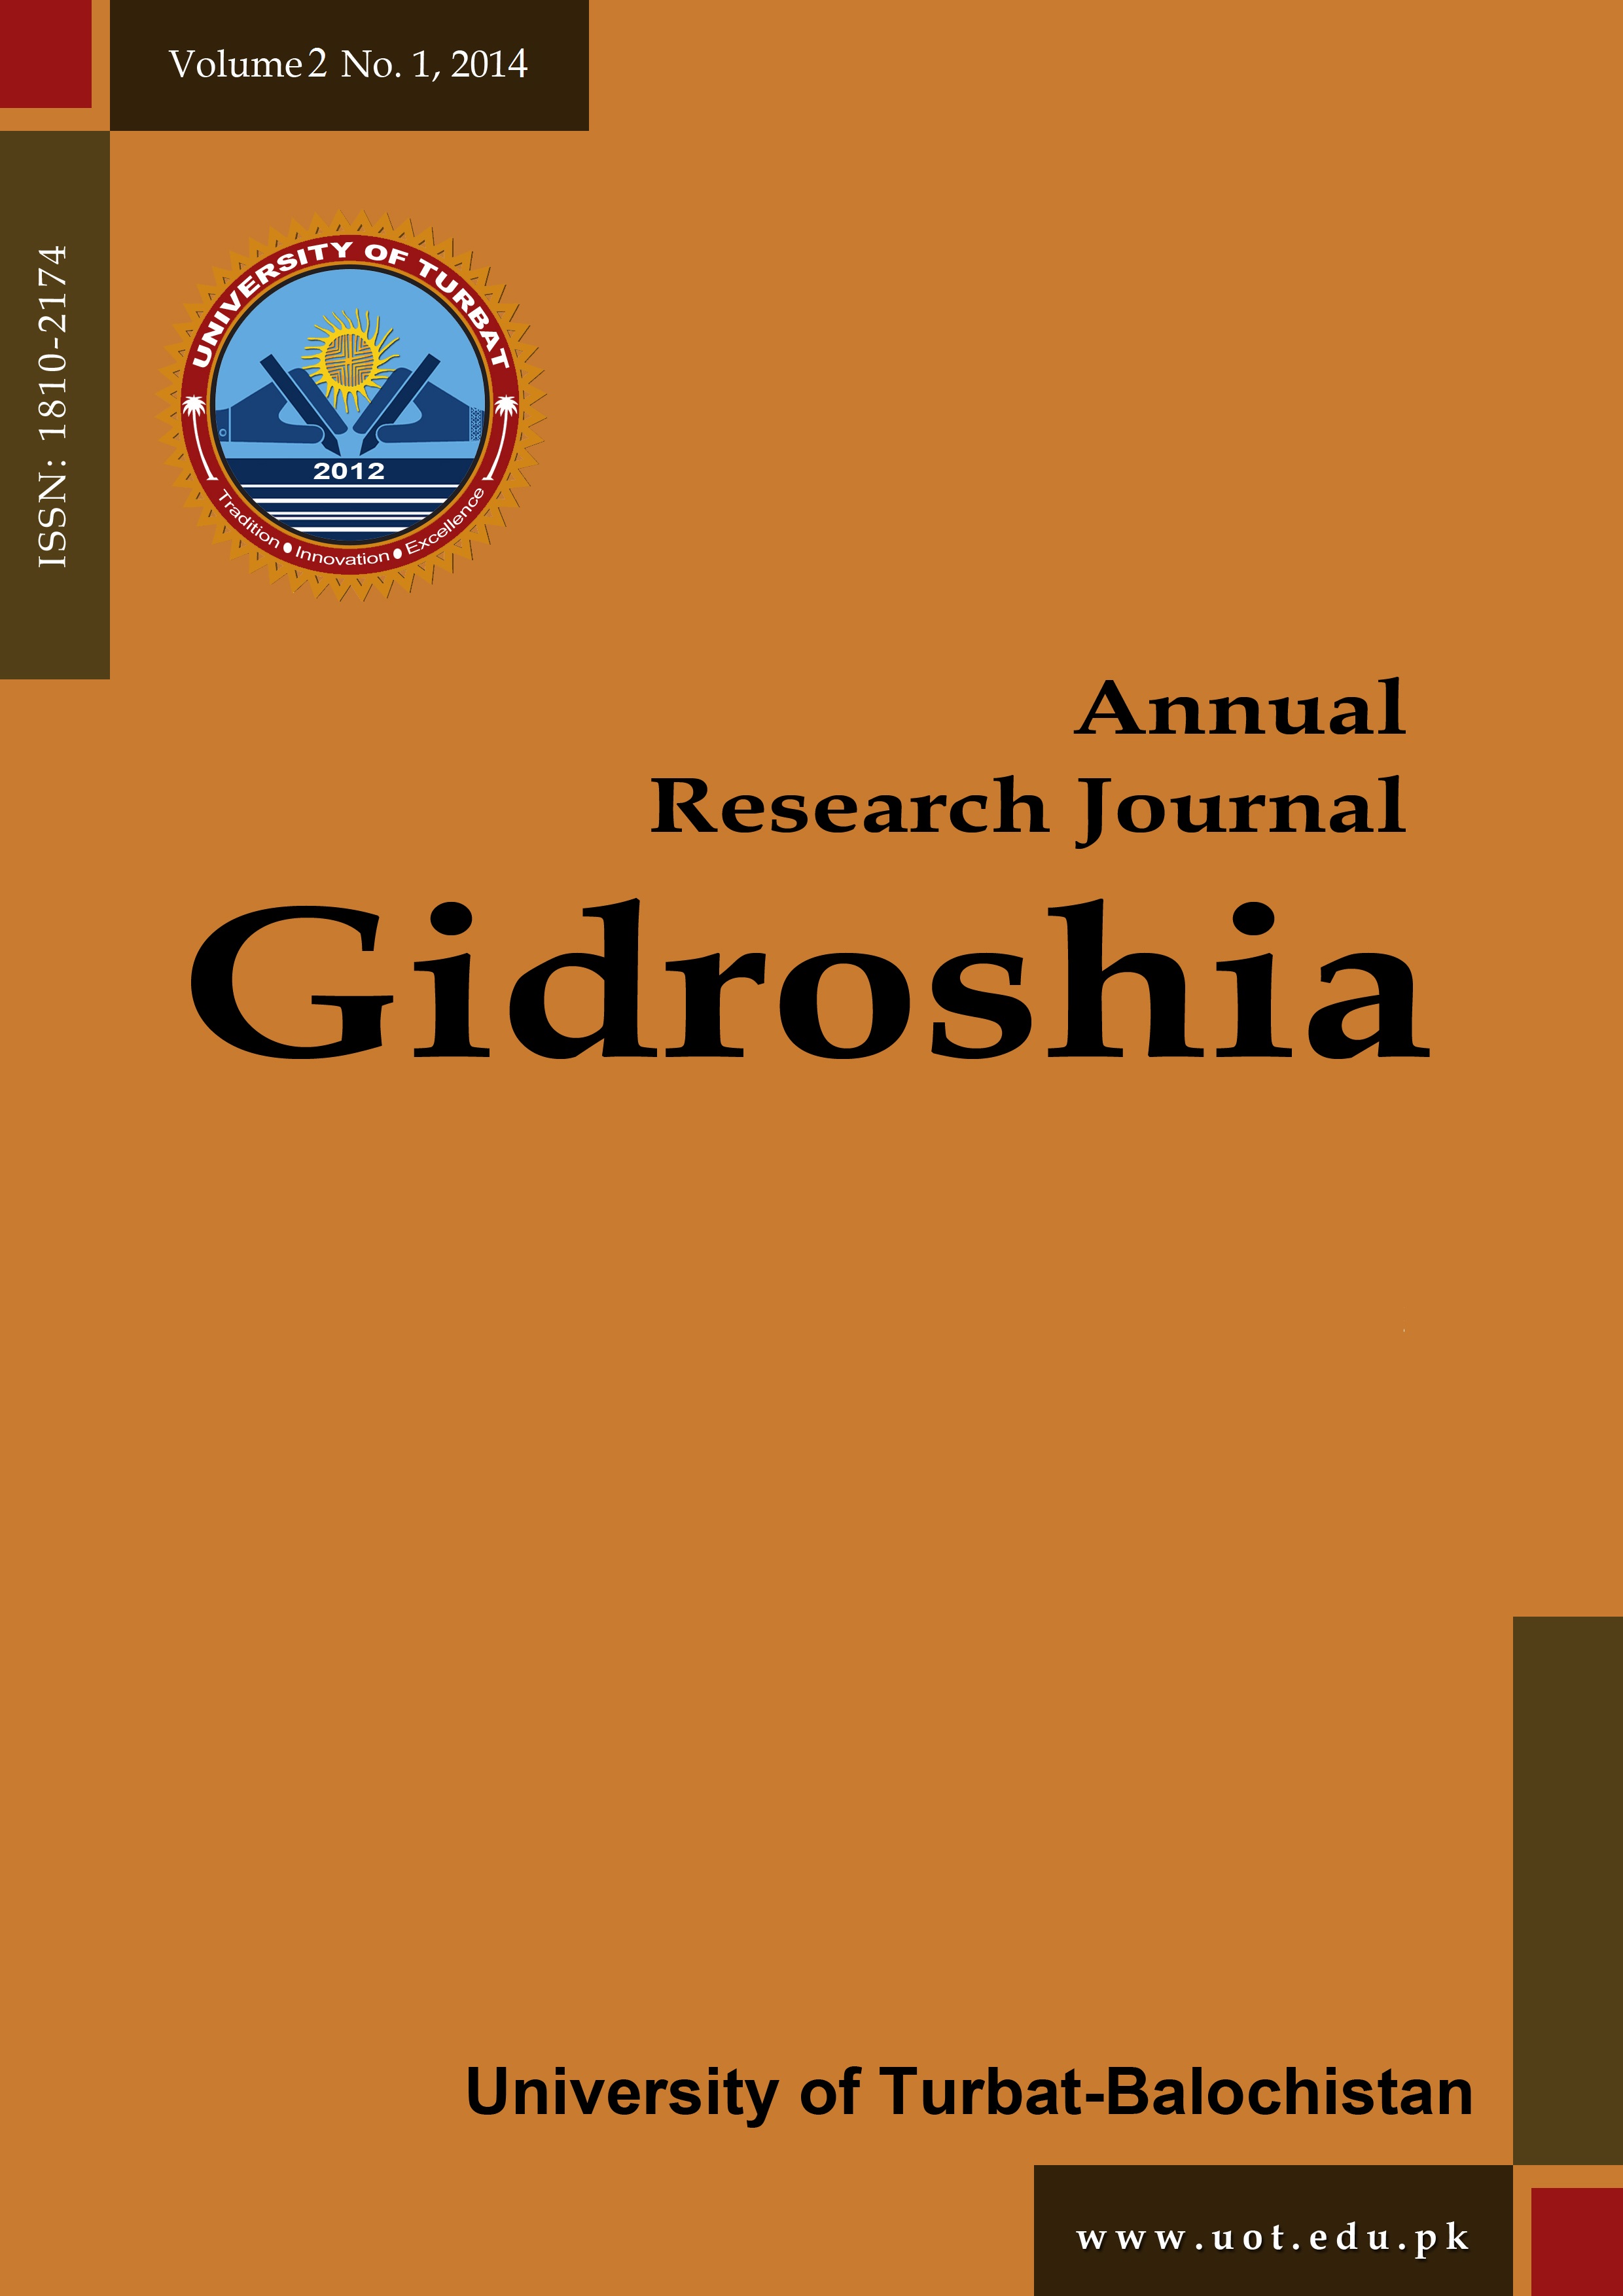 Annual Research Journal Gidroshia Volume 2 2014